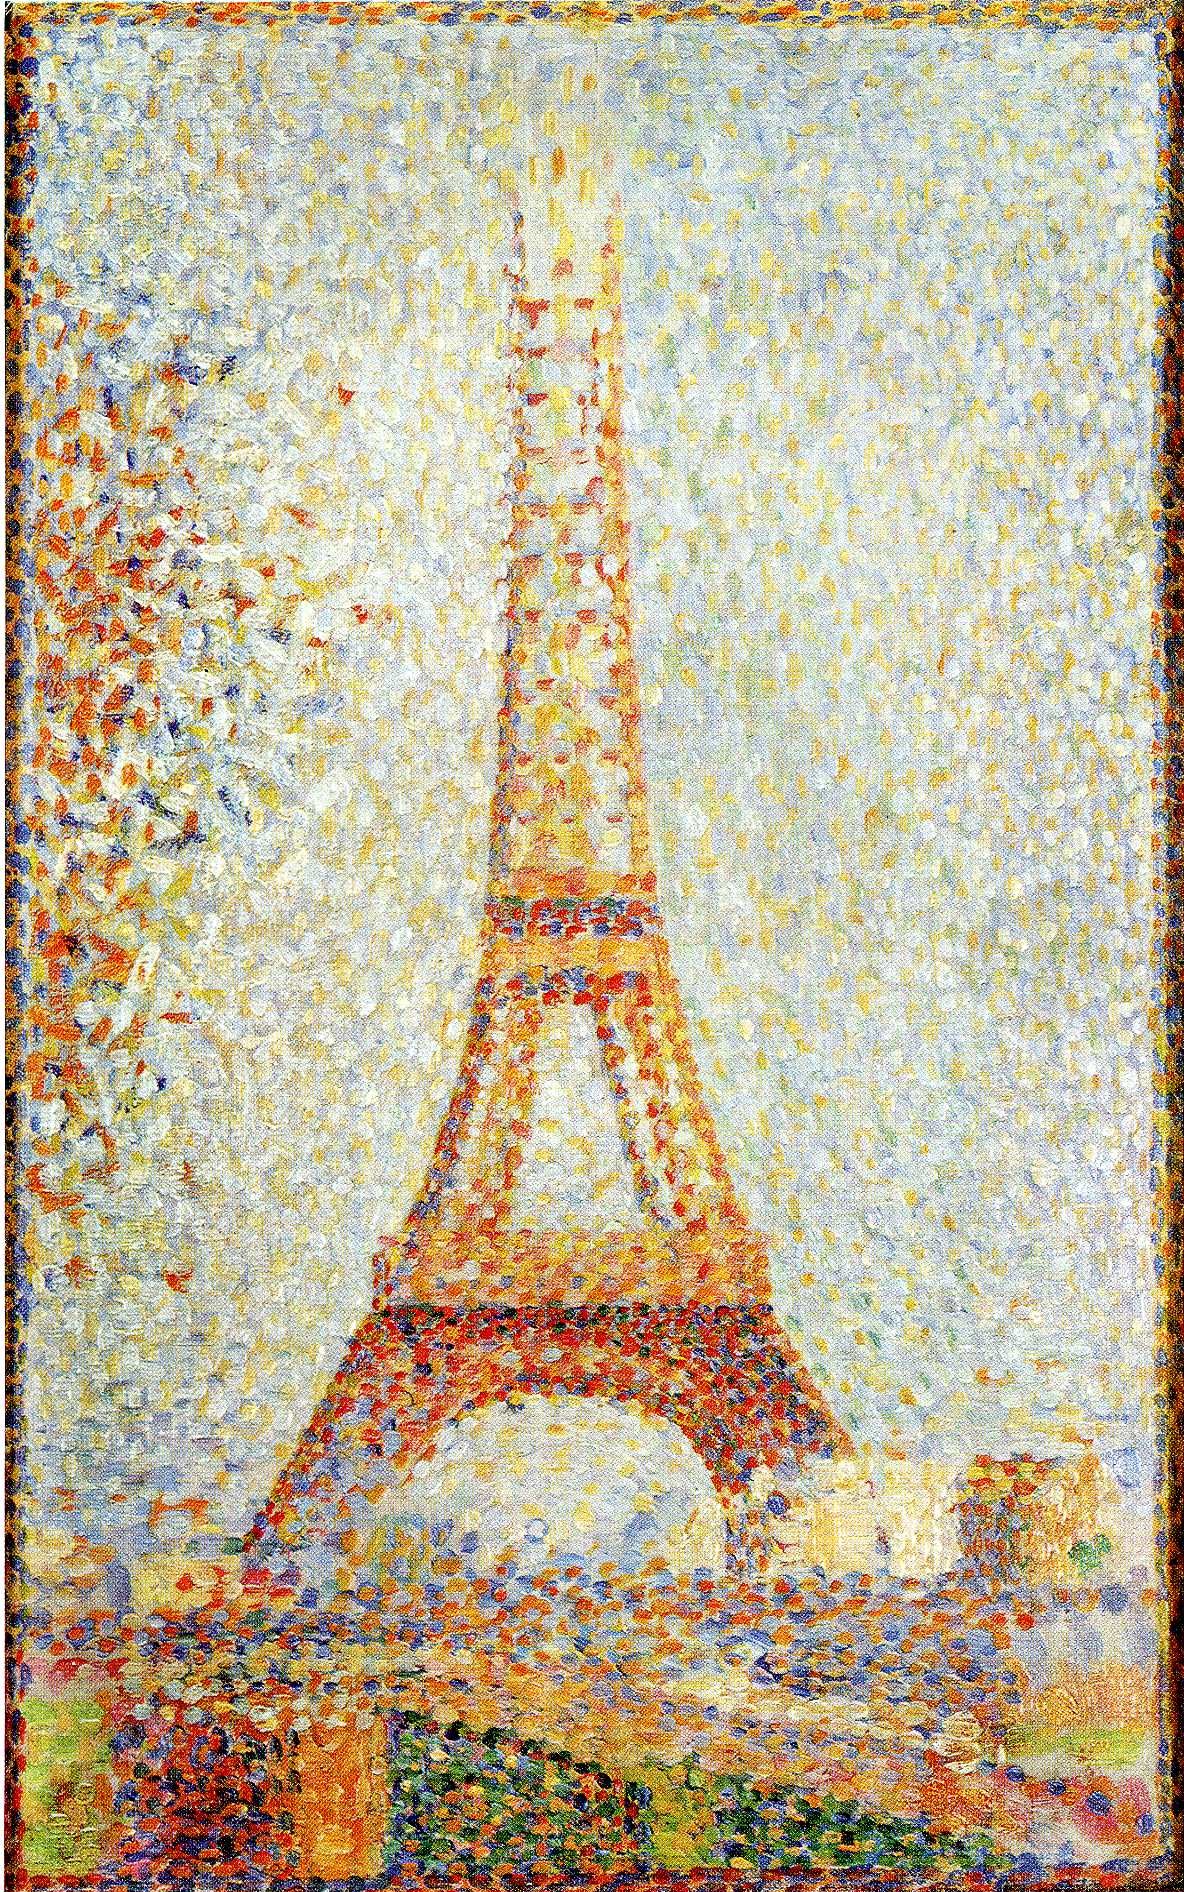 The Eiffel Tower 1889 